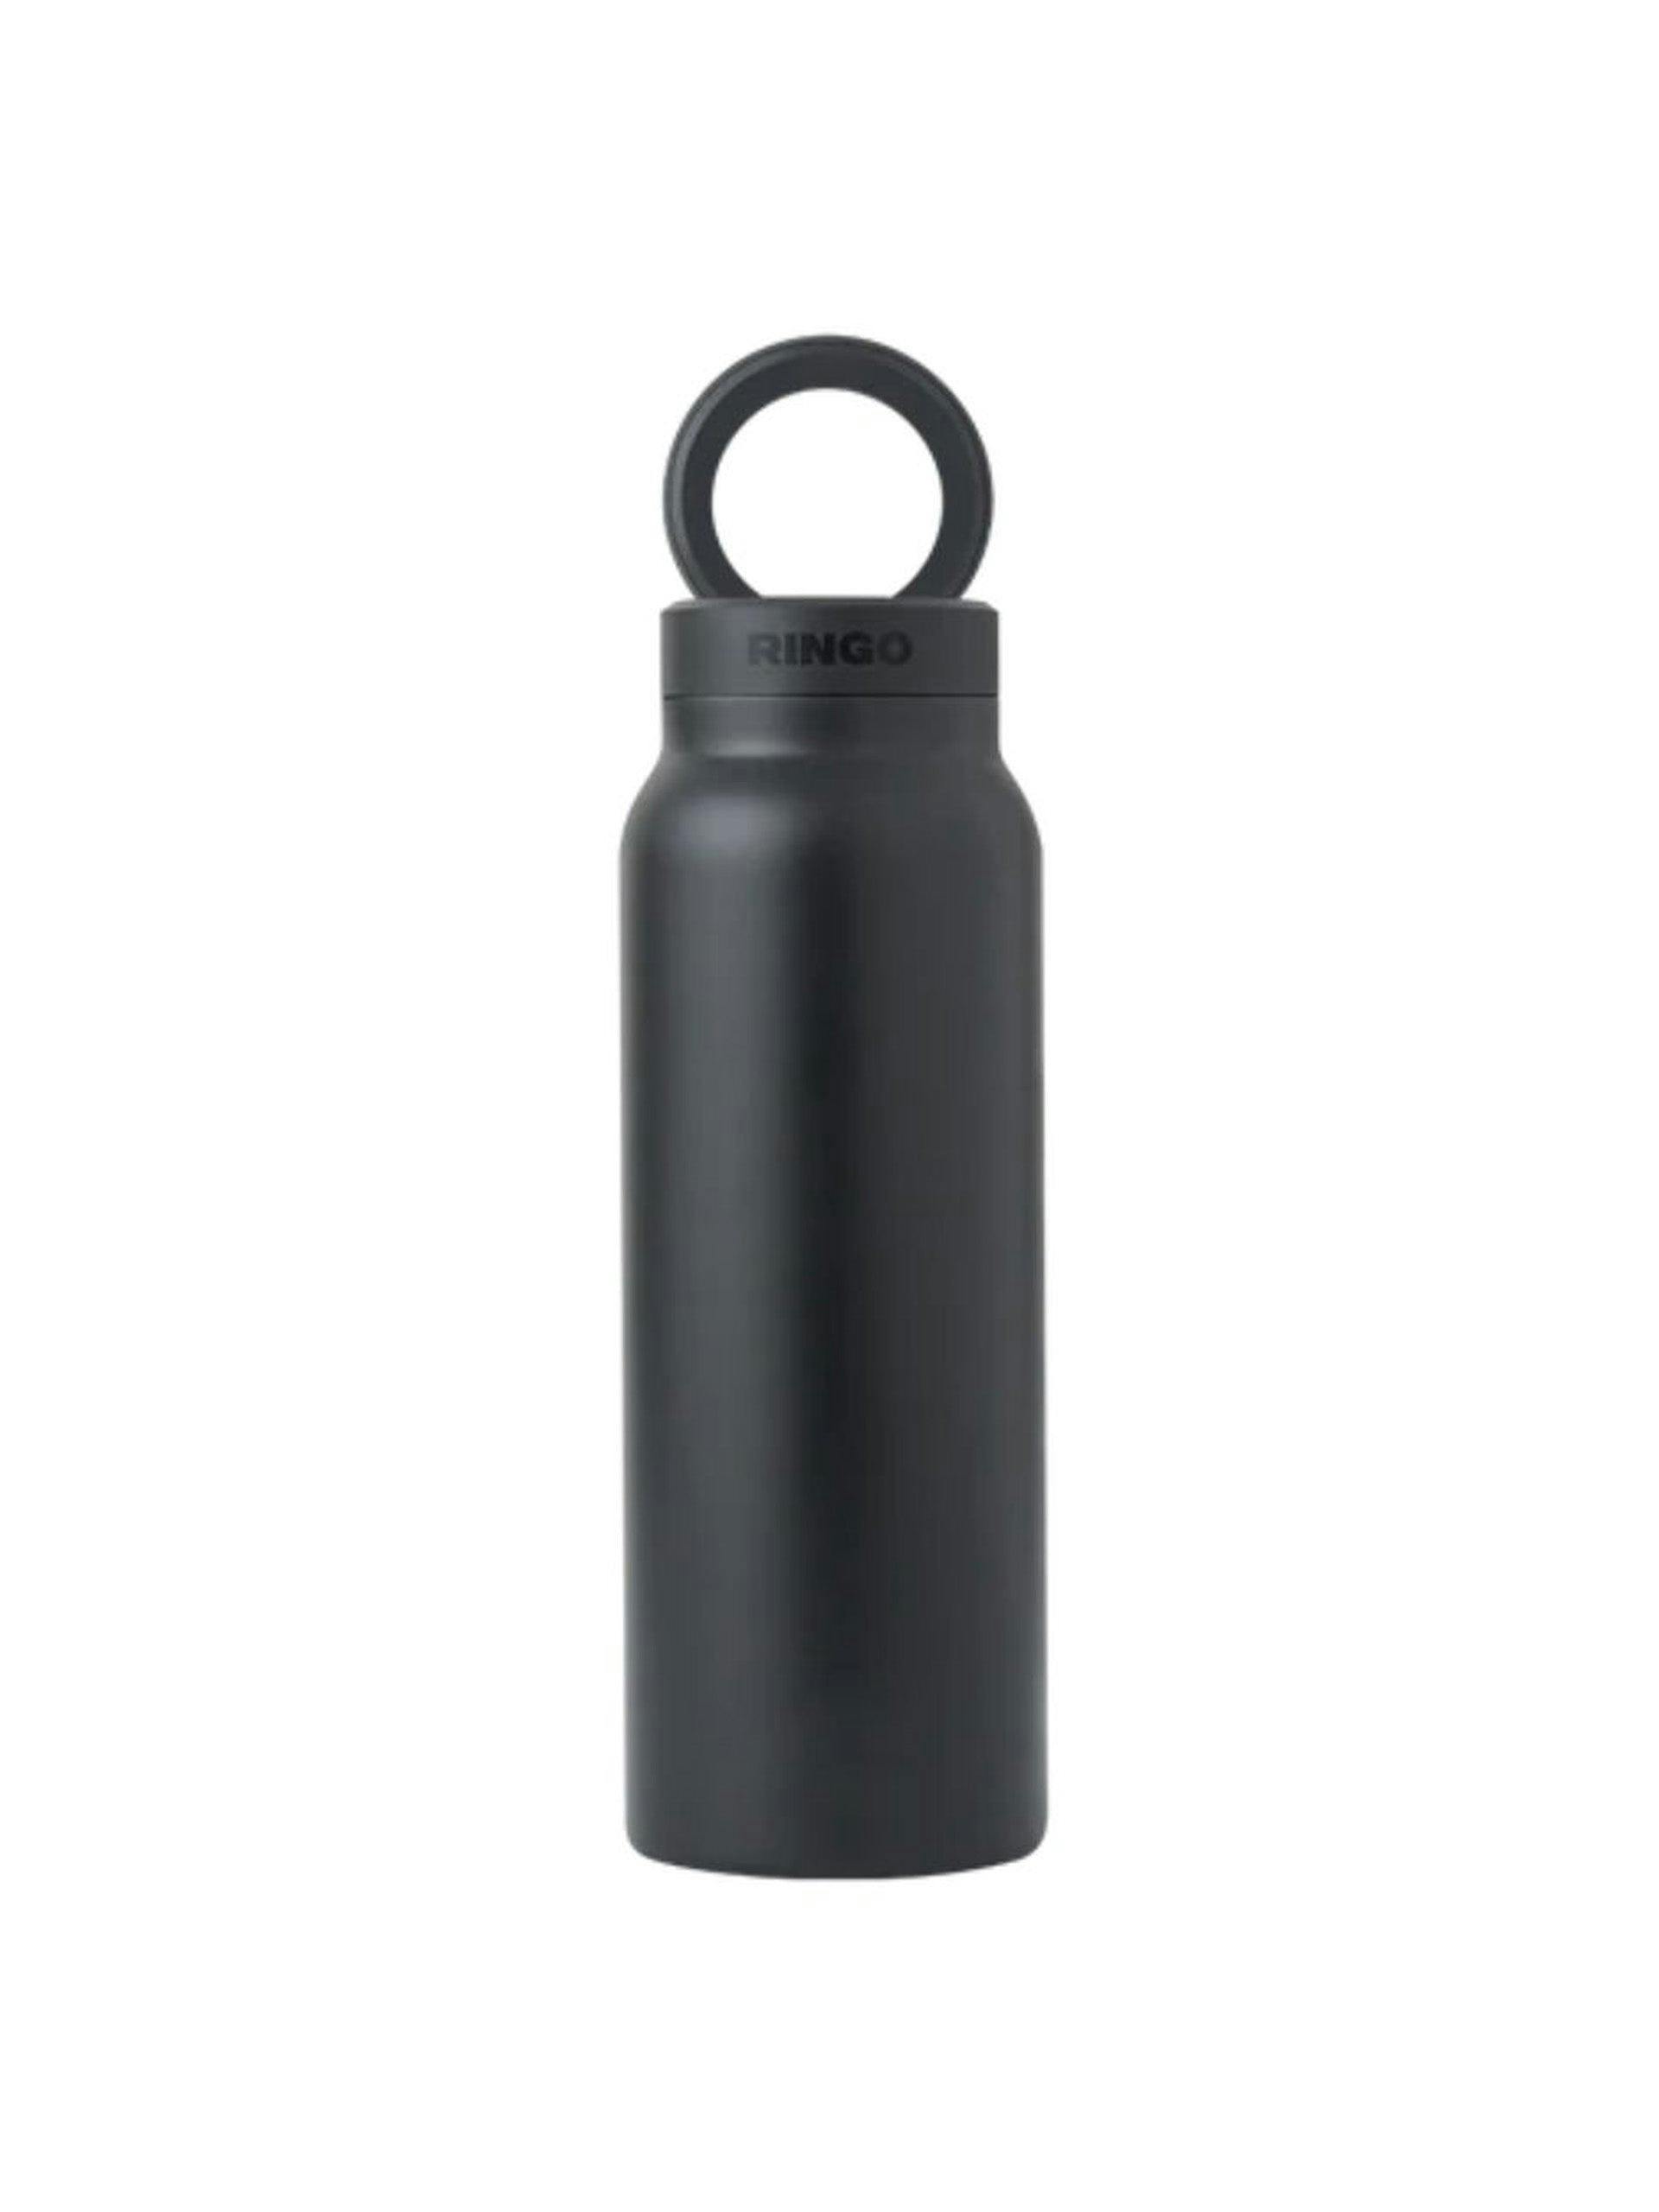 MagSafe water bottle